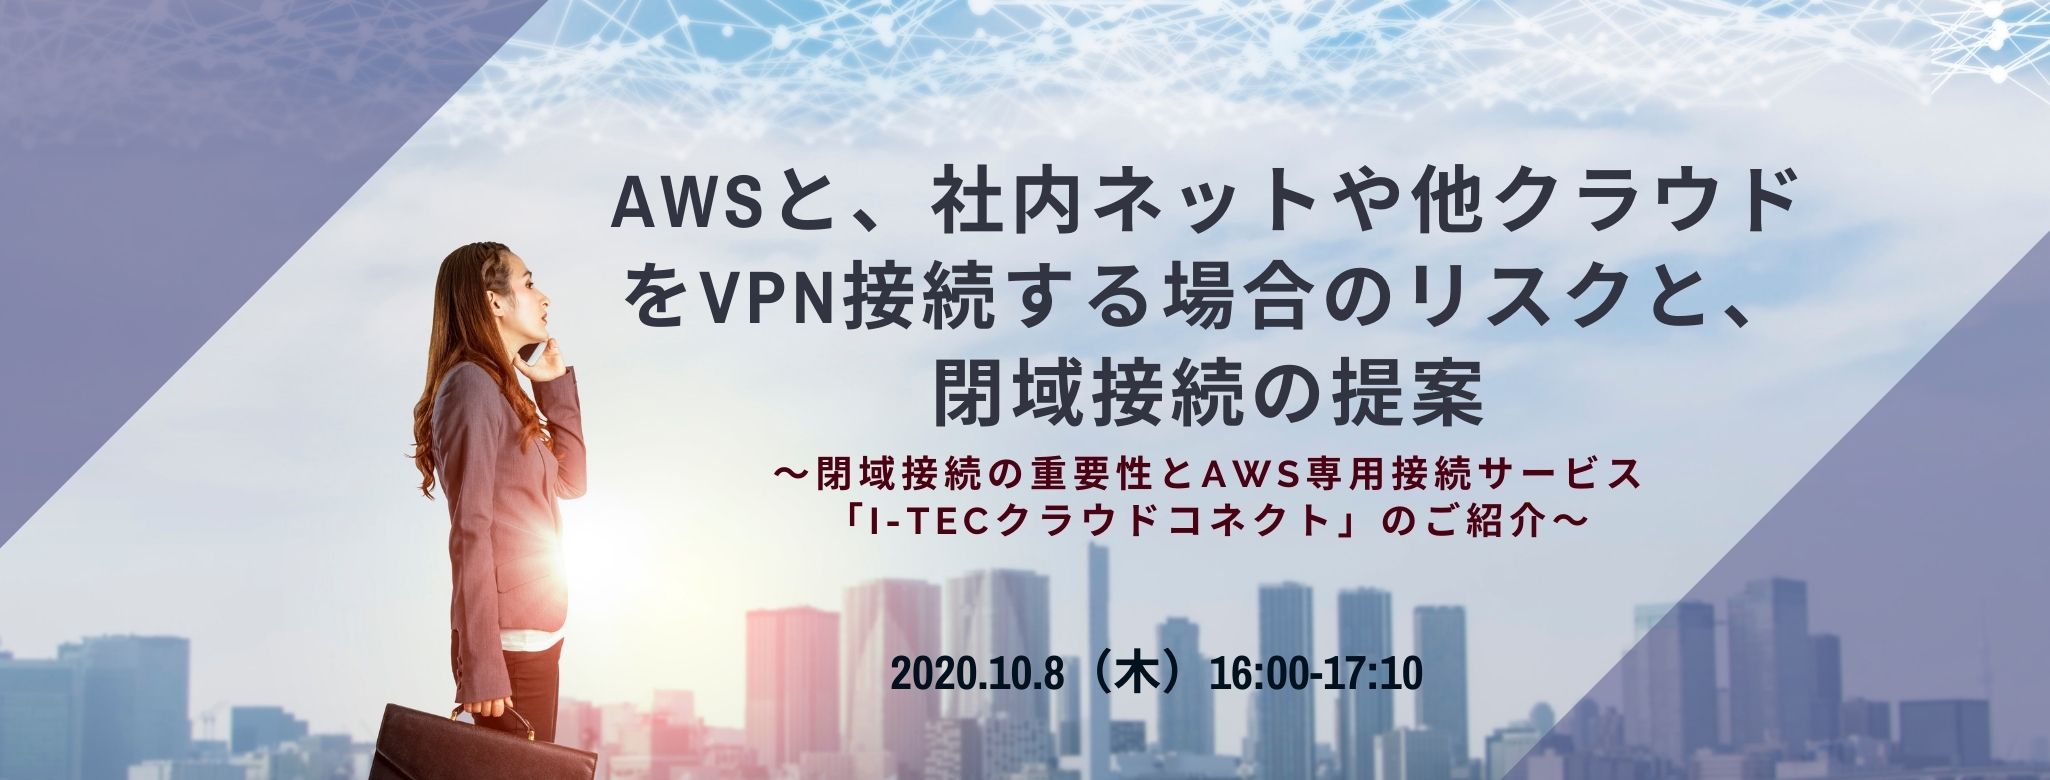  AWSと、社内ネットや他クラウドをVPN接続する場合のリスクと、閉域接続の提案 ～閉域接続の重要性とAWS専用接続サービス「i-TECクラウドコネクト」のご紹介～